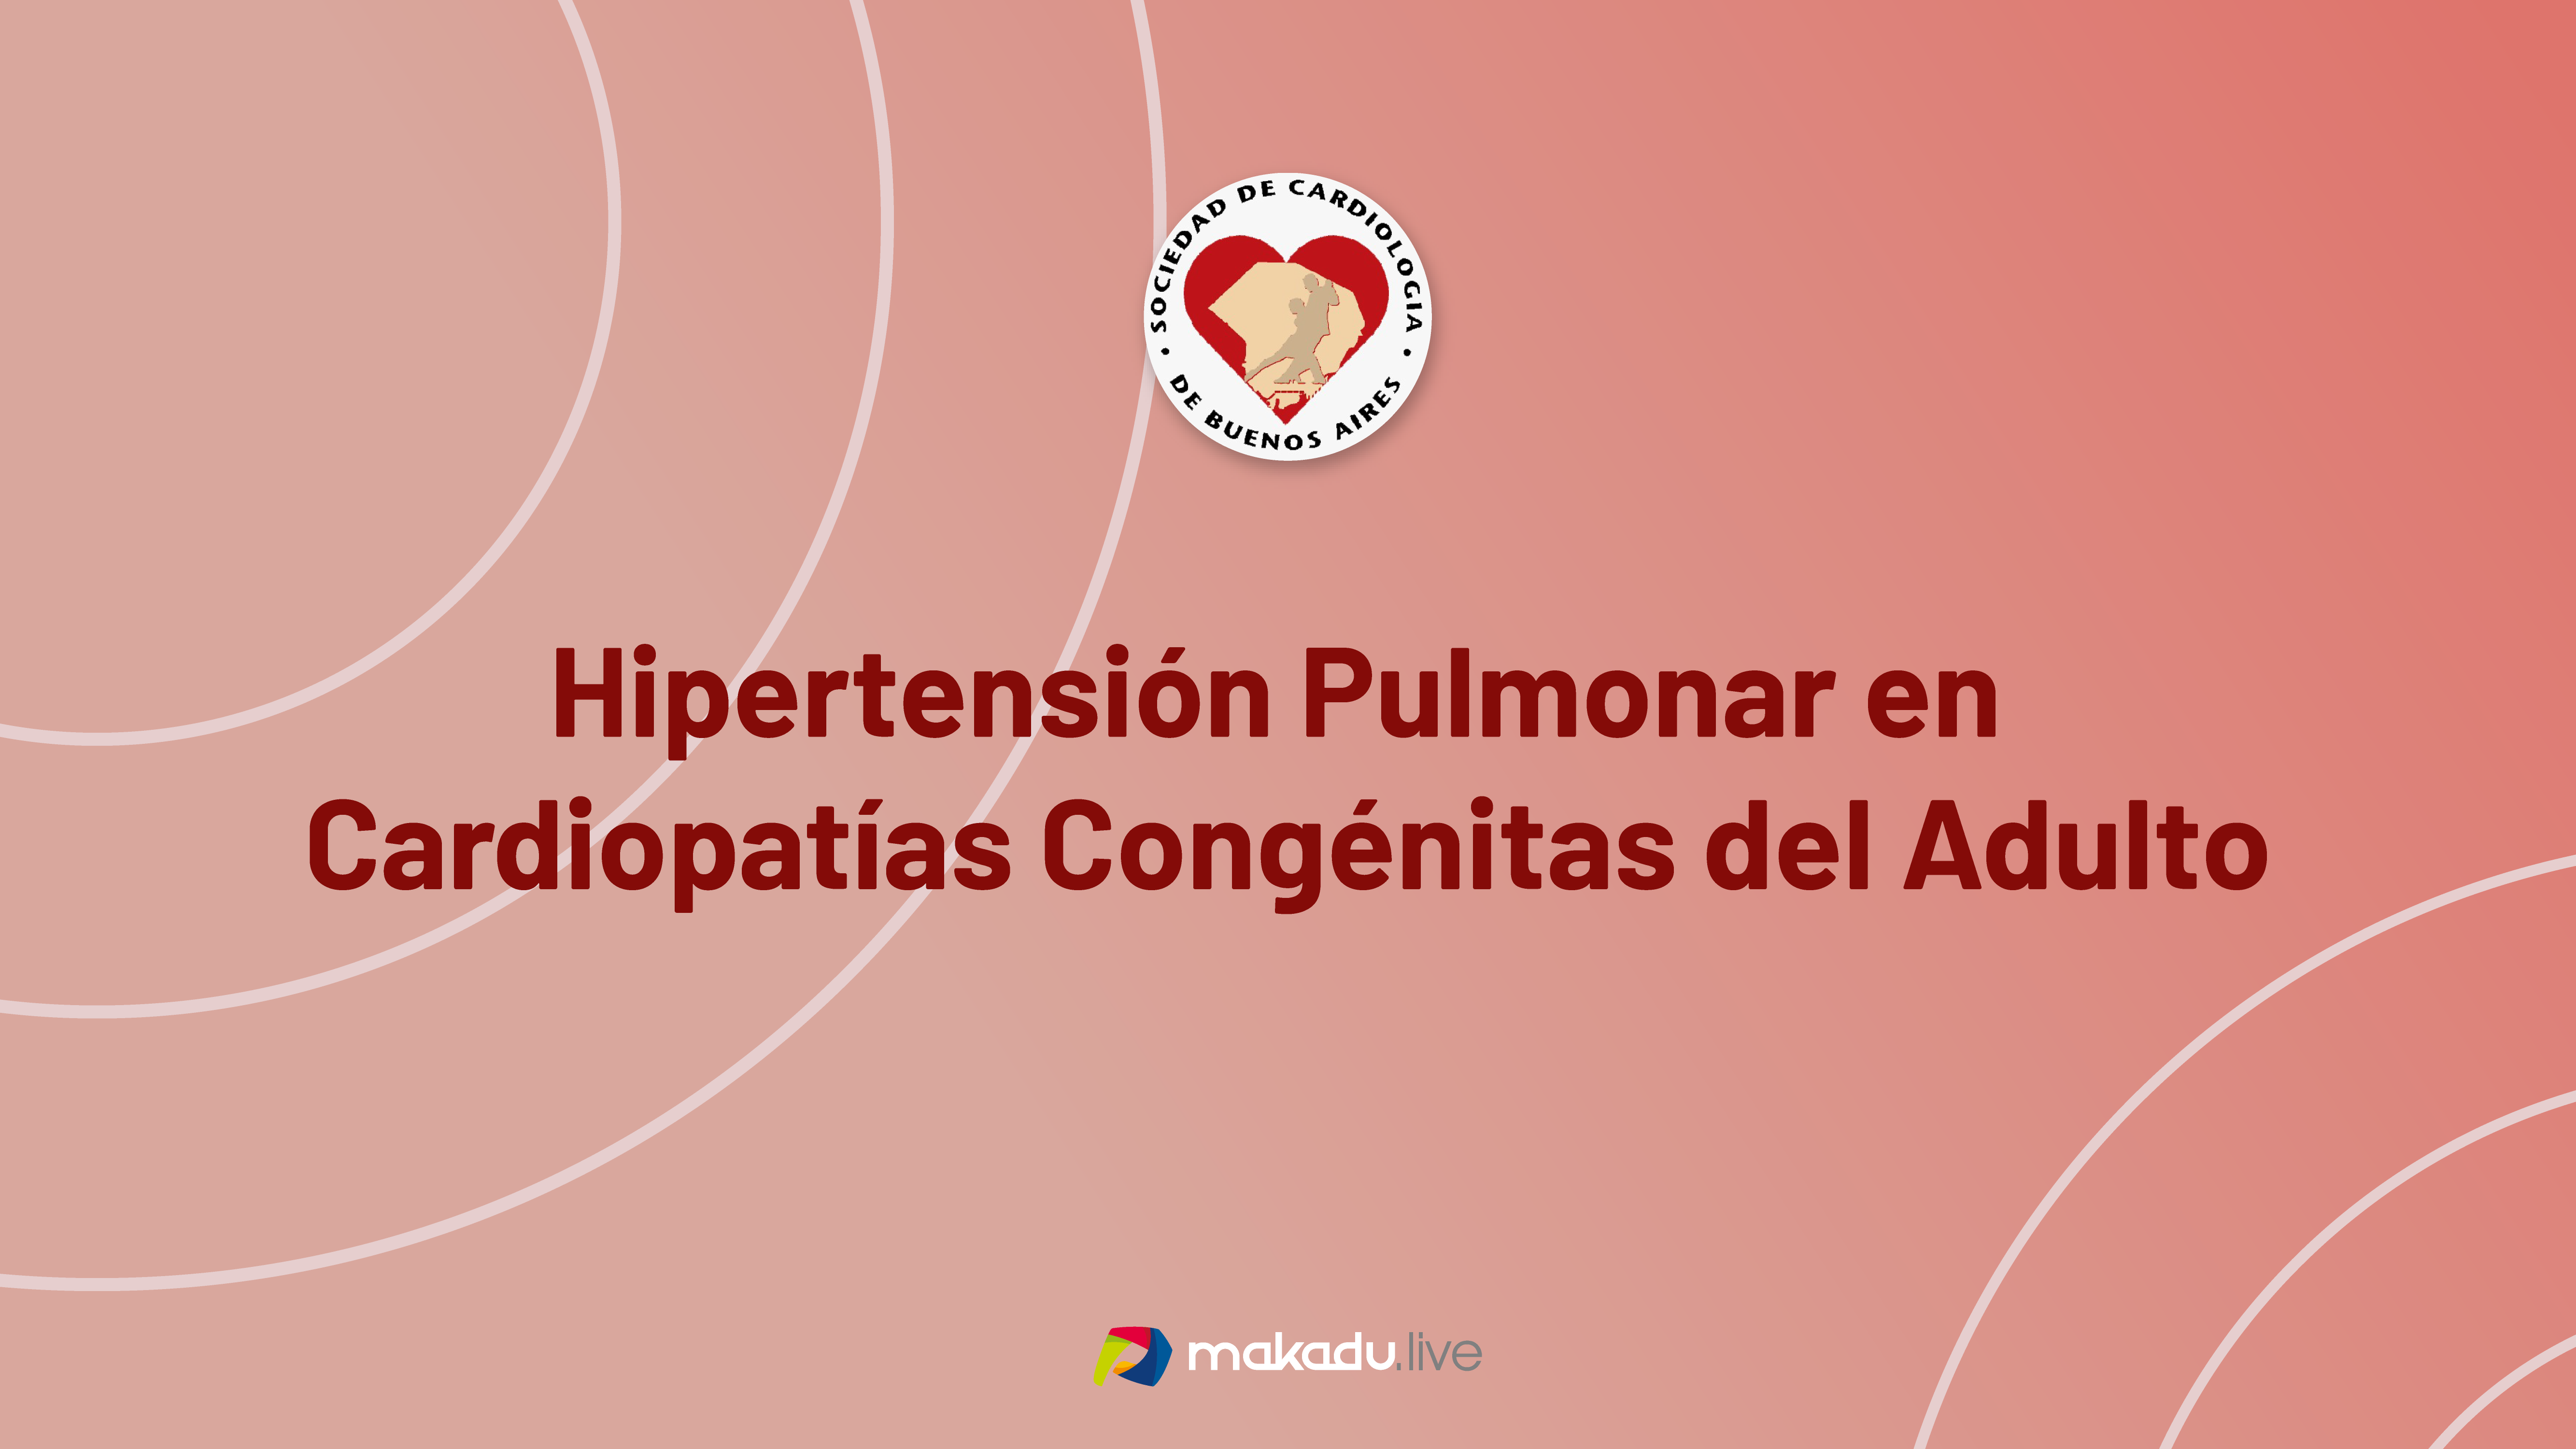 Curso Hipertensión pulmonar en Cardiopatías Congénitas del Adulto